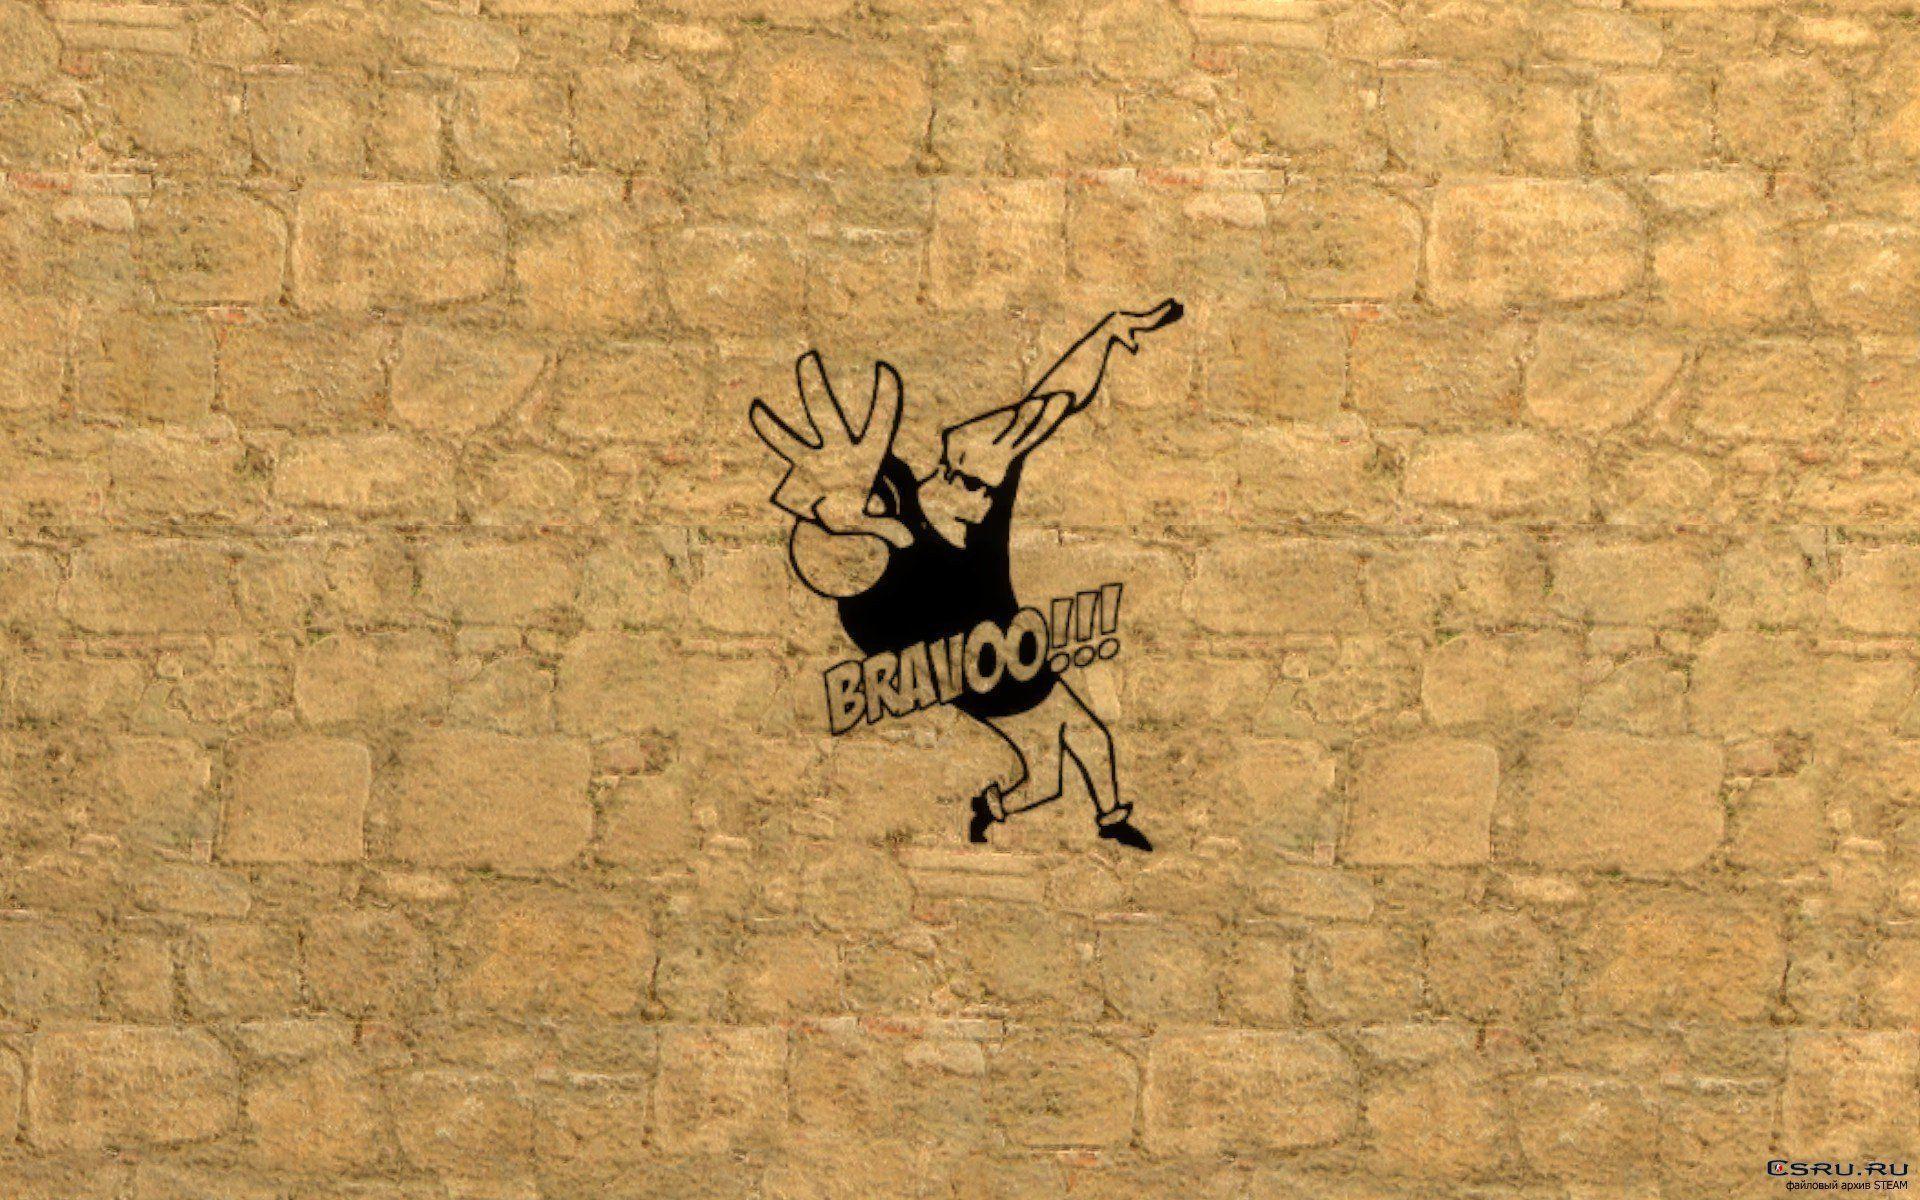 Johnny Bravo on the wall wallpaper. Cartoons HD Wallpaper